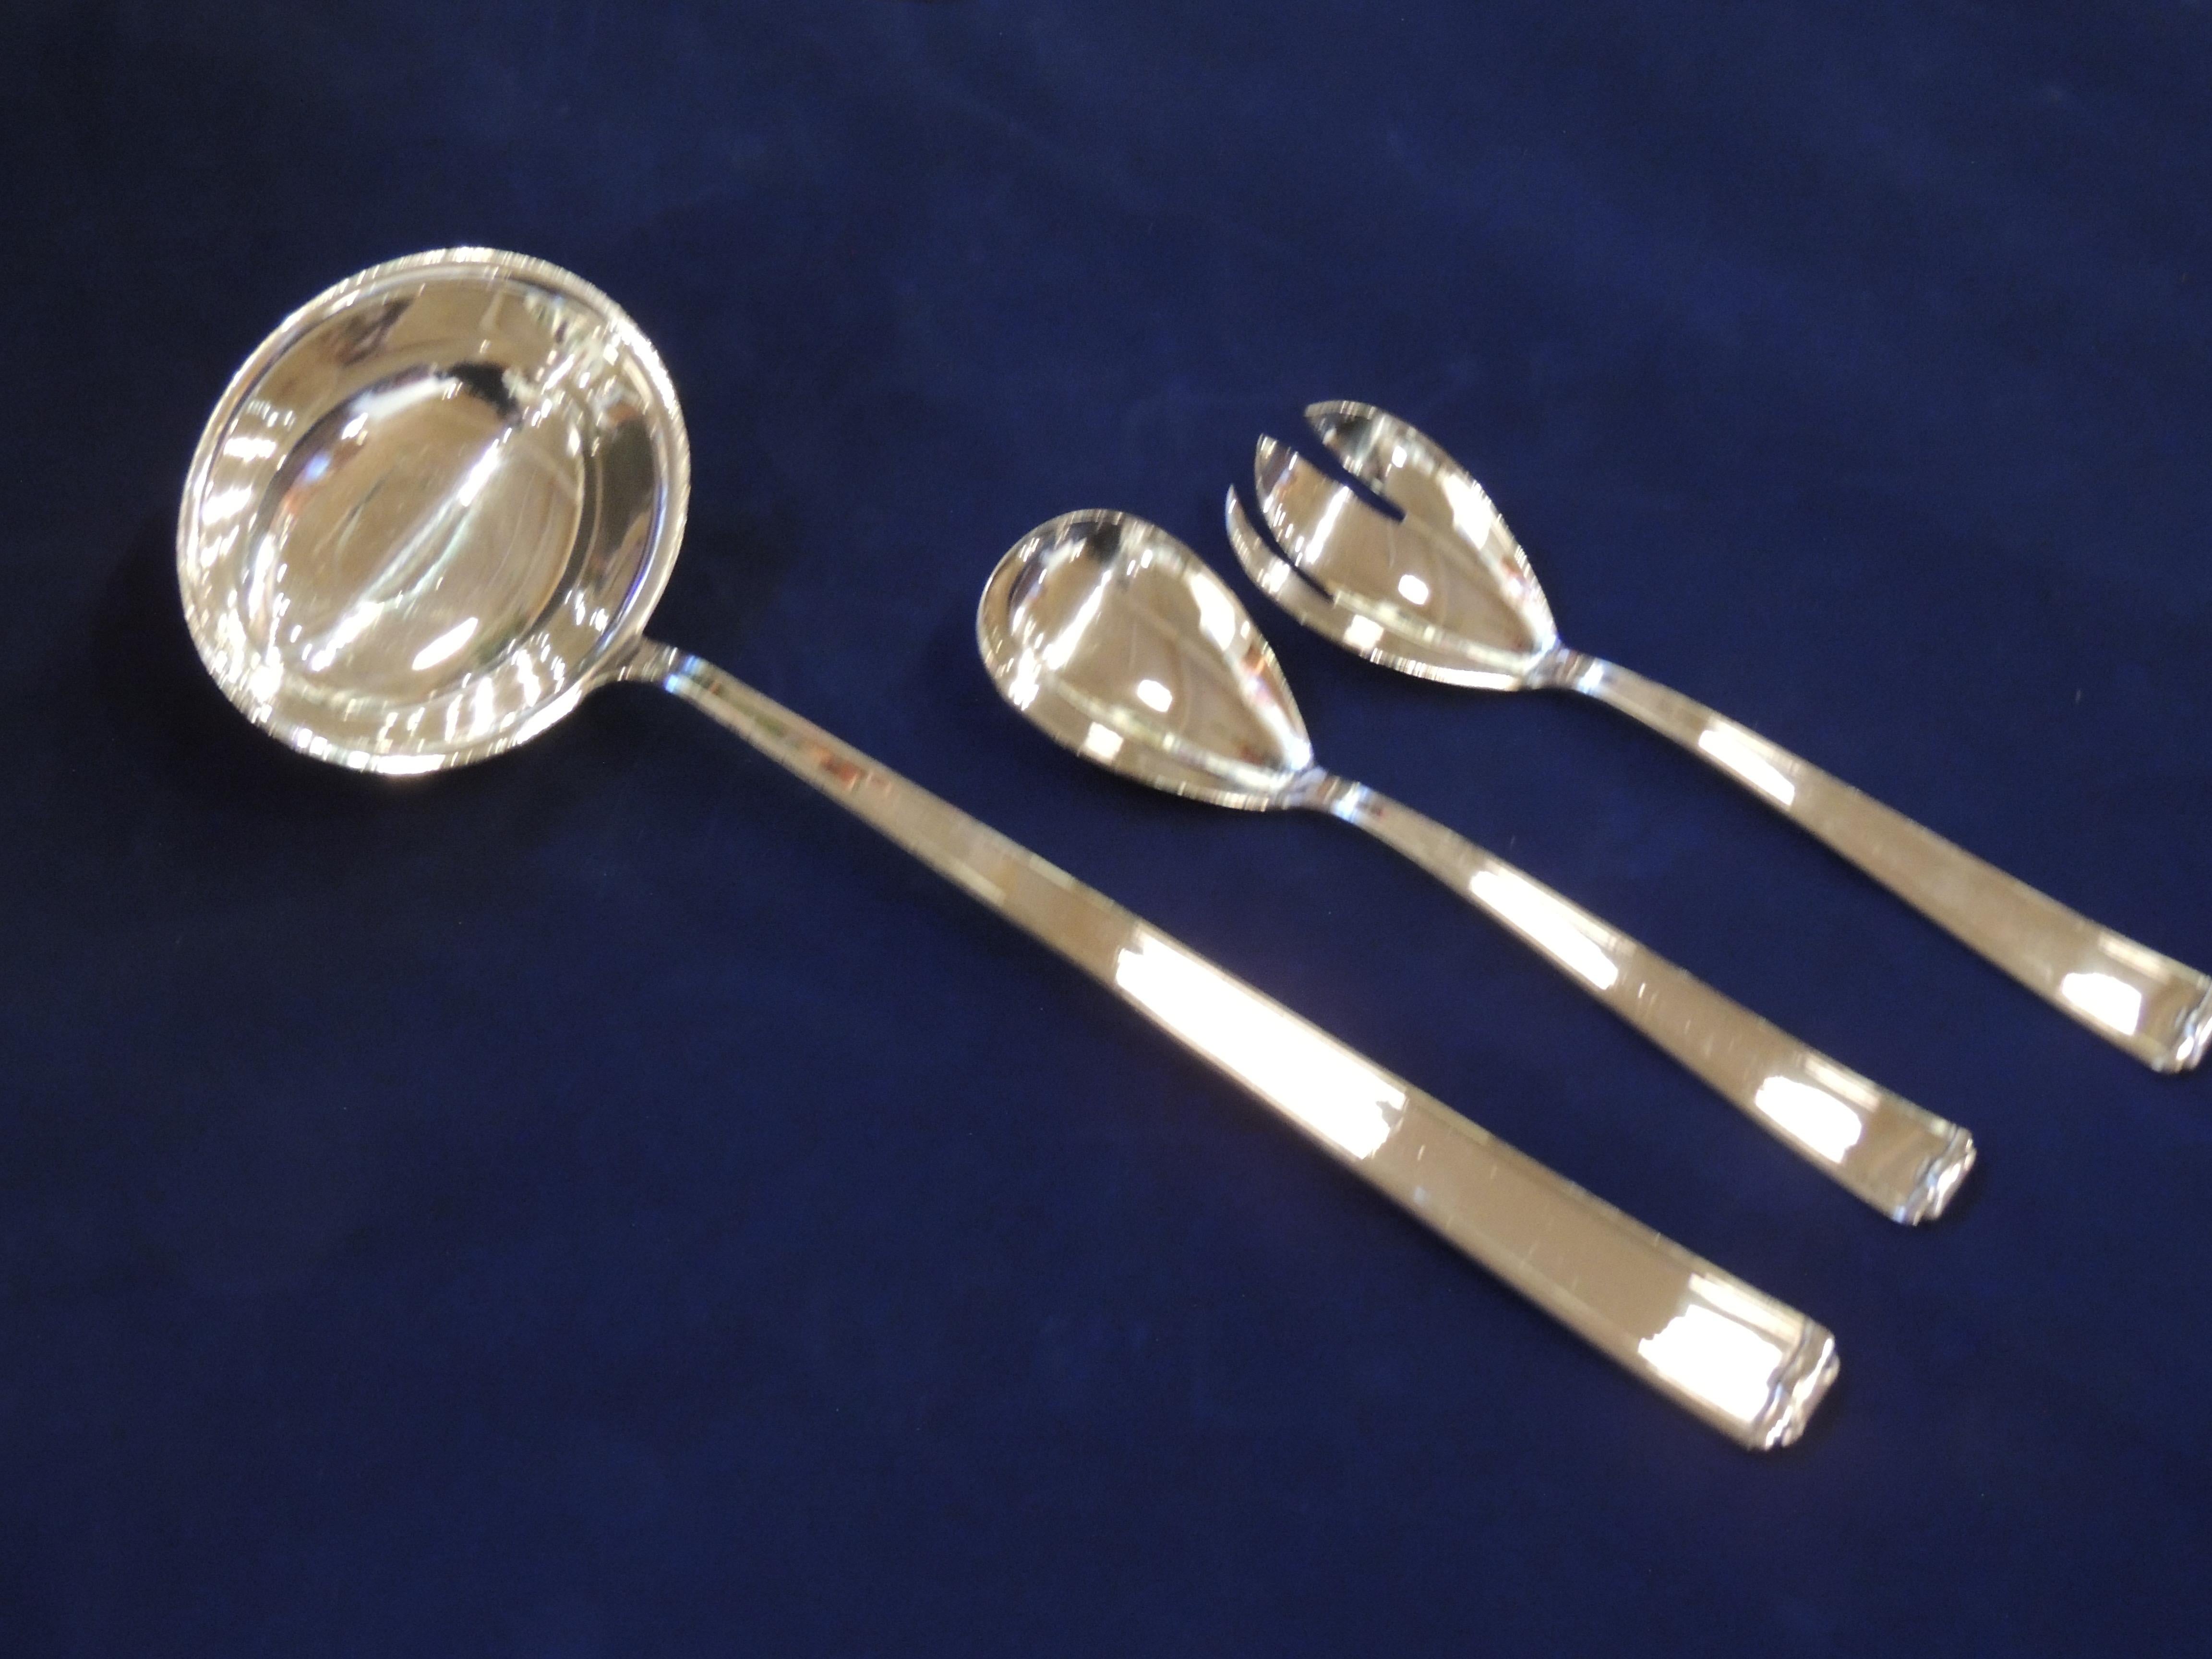 Silver Plate Complete Art Deco Silverware Service by Plata Lappas in Cabinet